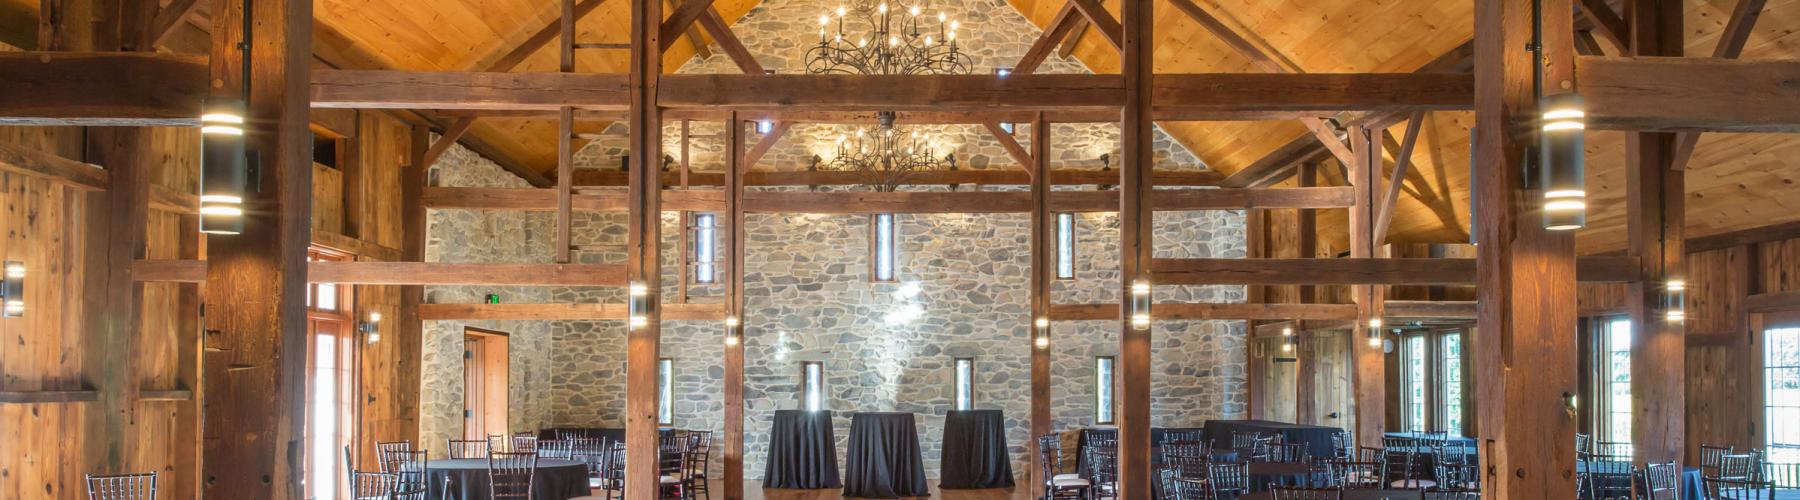 Wedding Barn interior